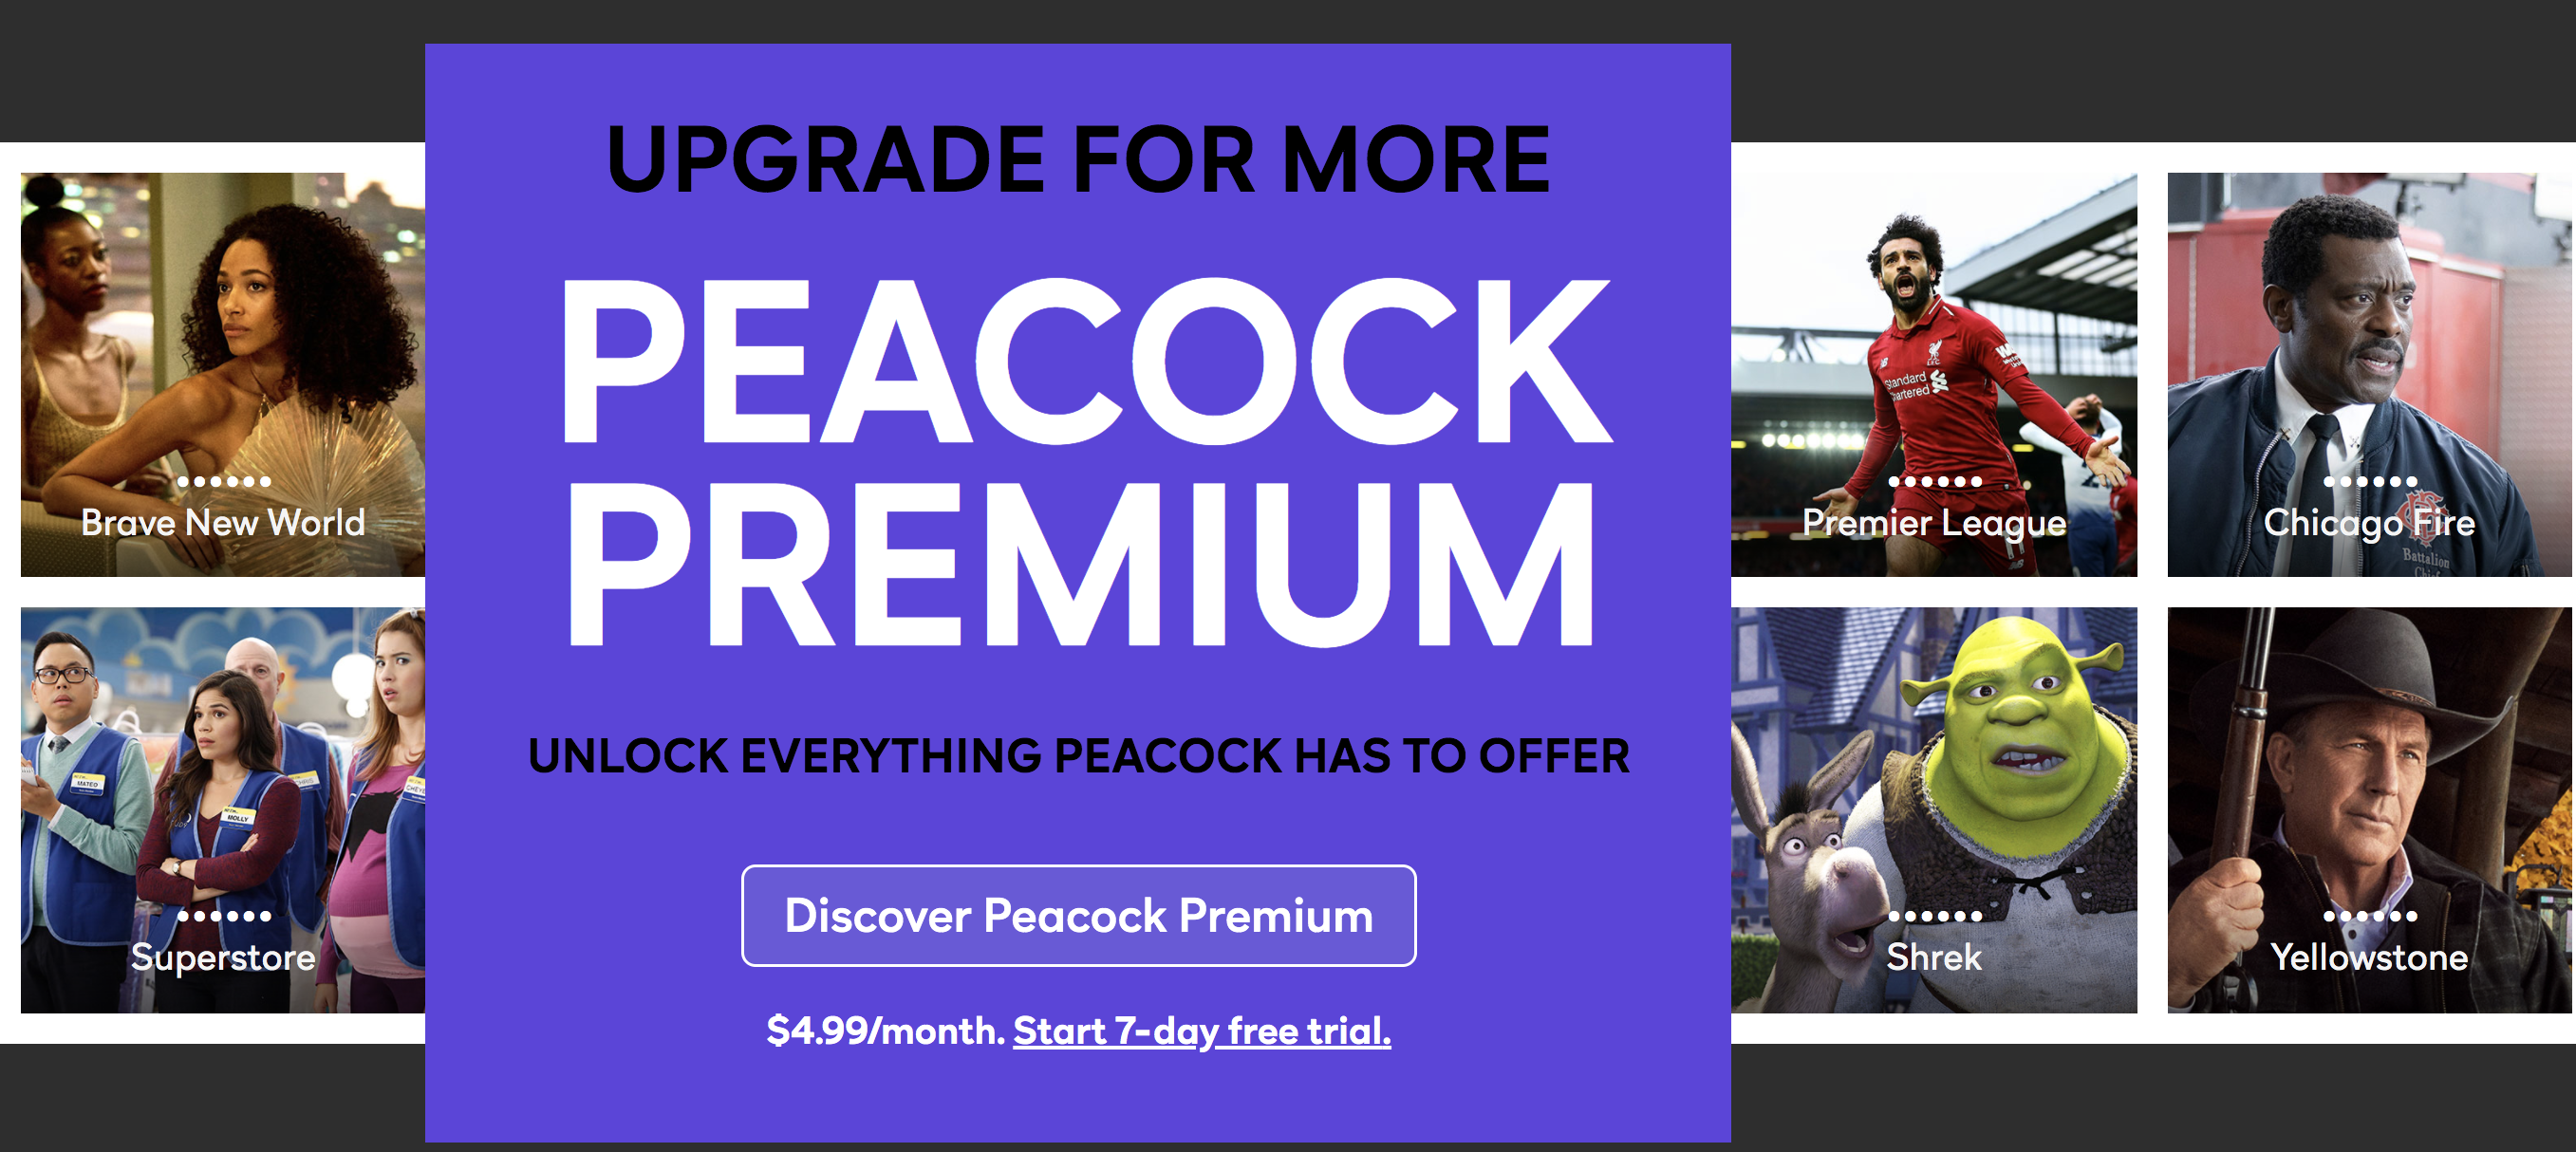 The Peacock Premium Banner